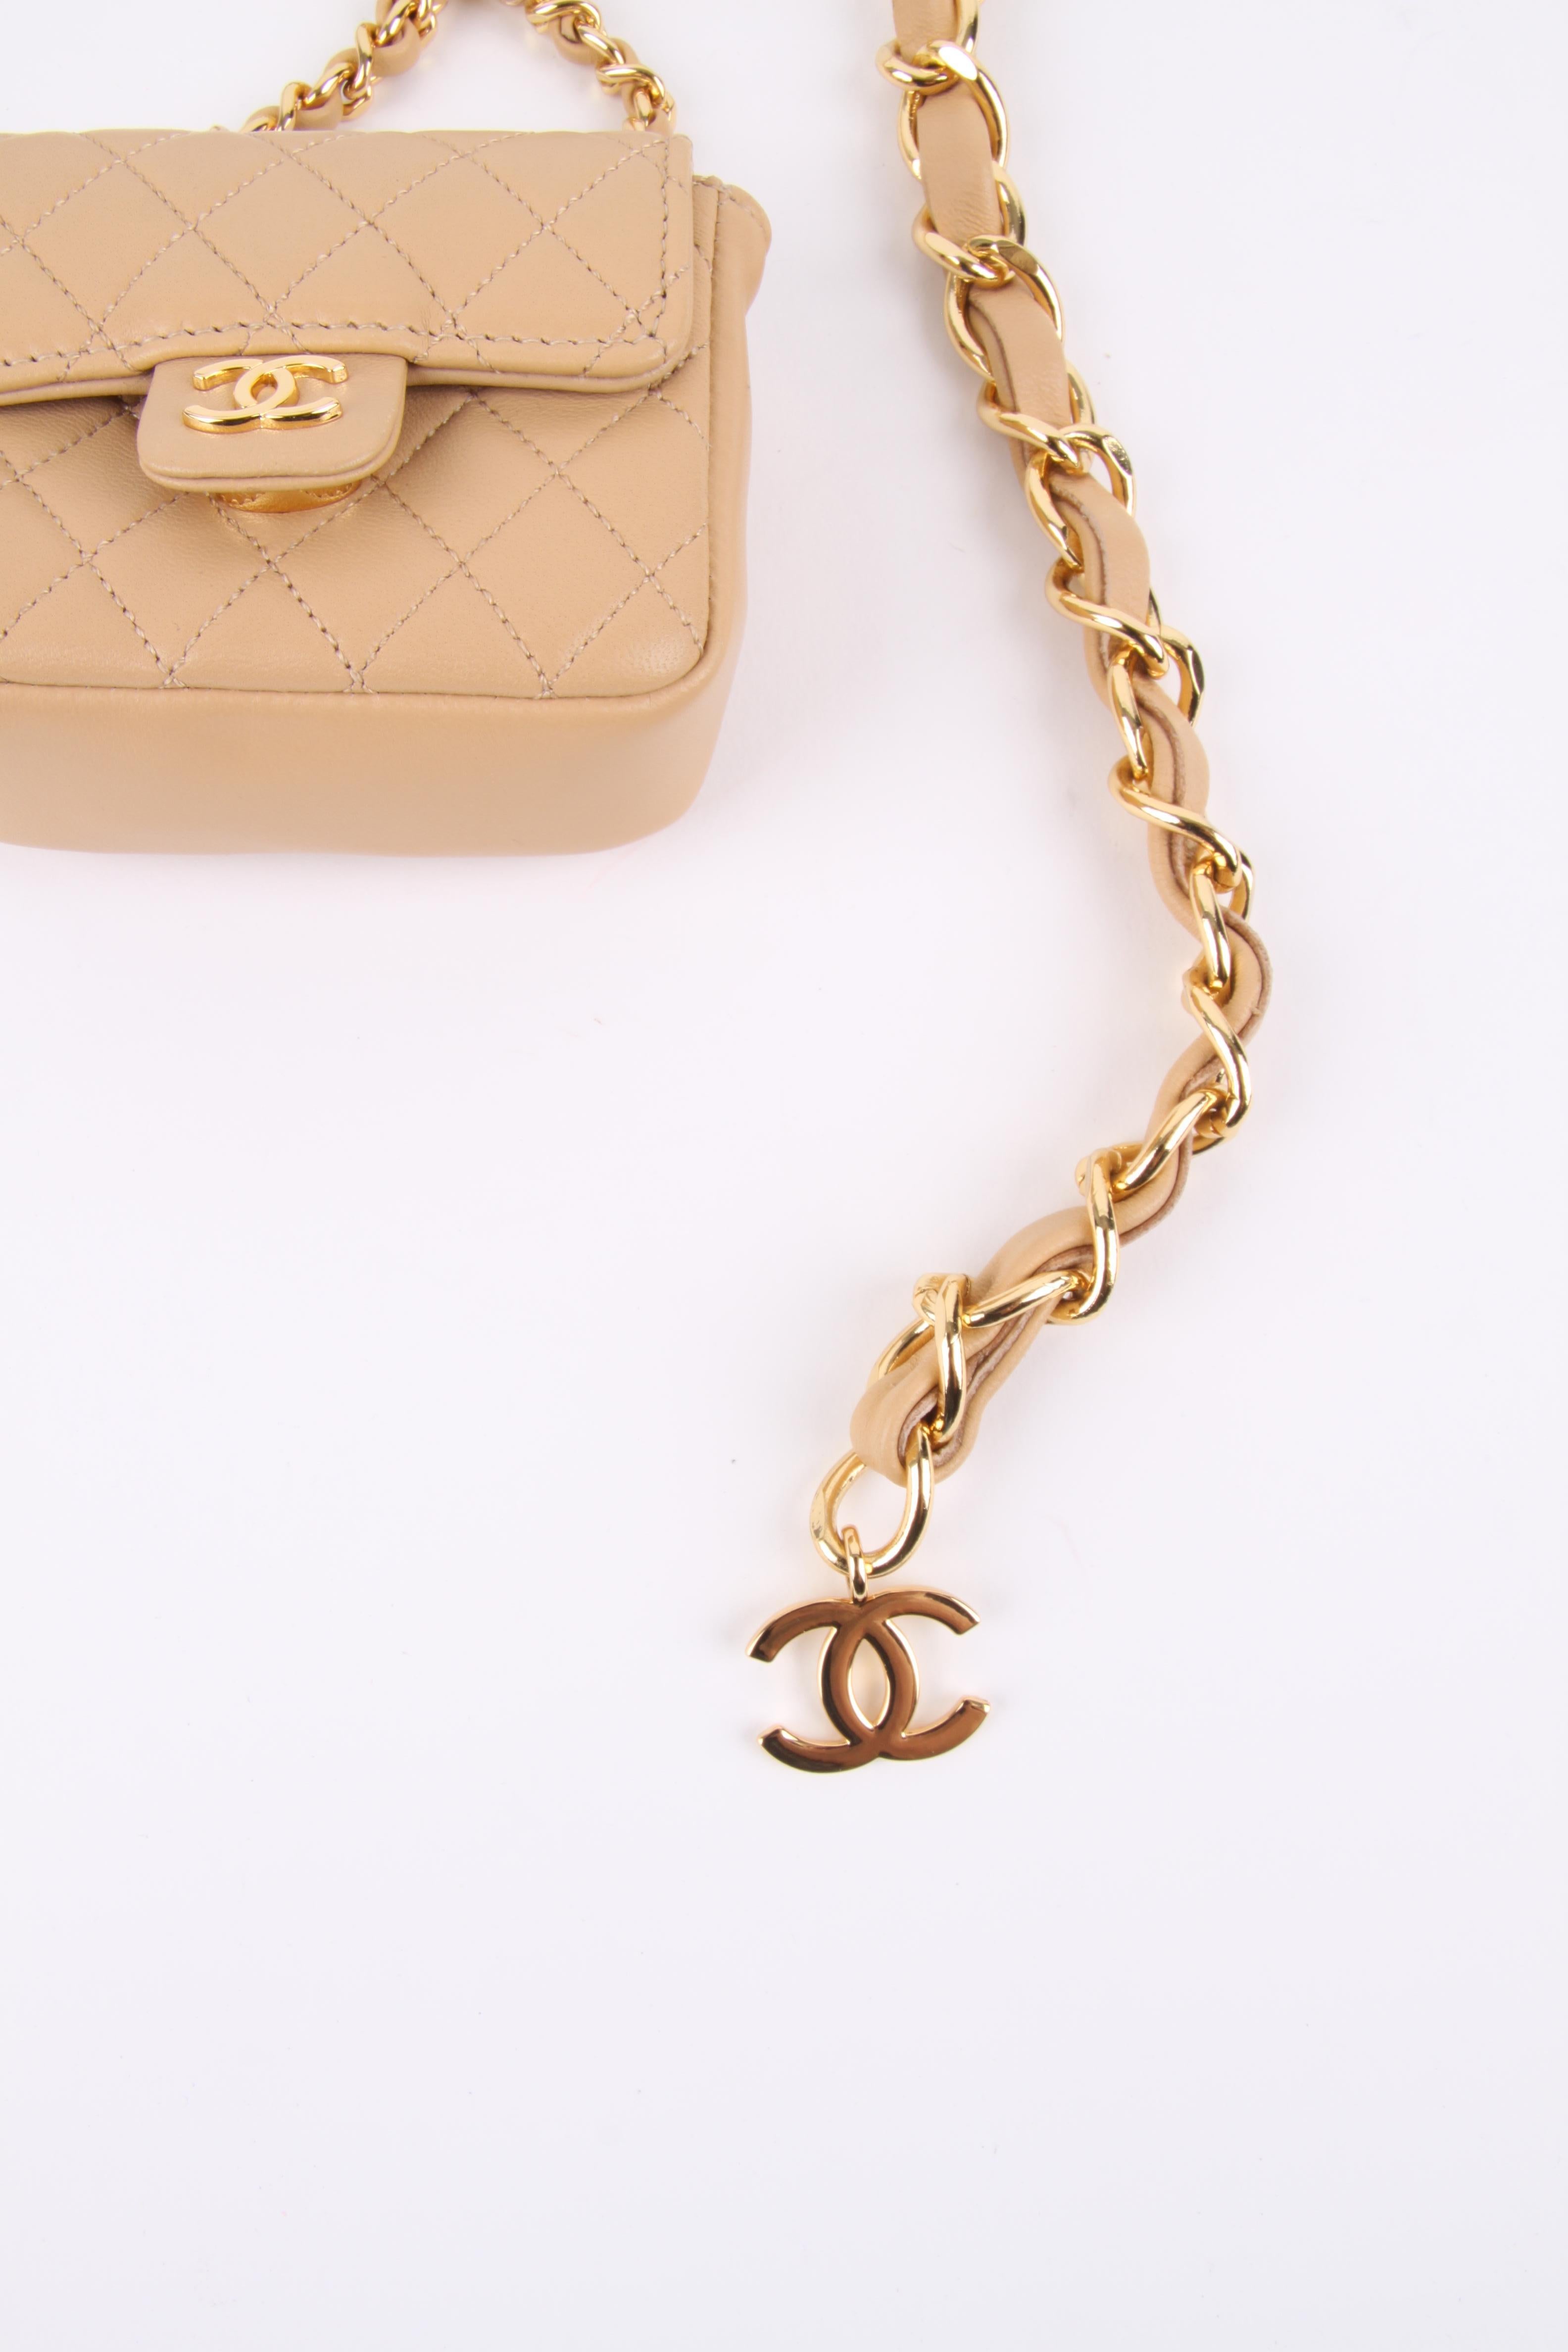 Chanel Chain Belt Bag - beige 2